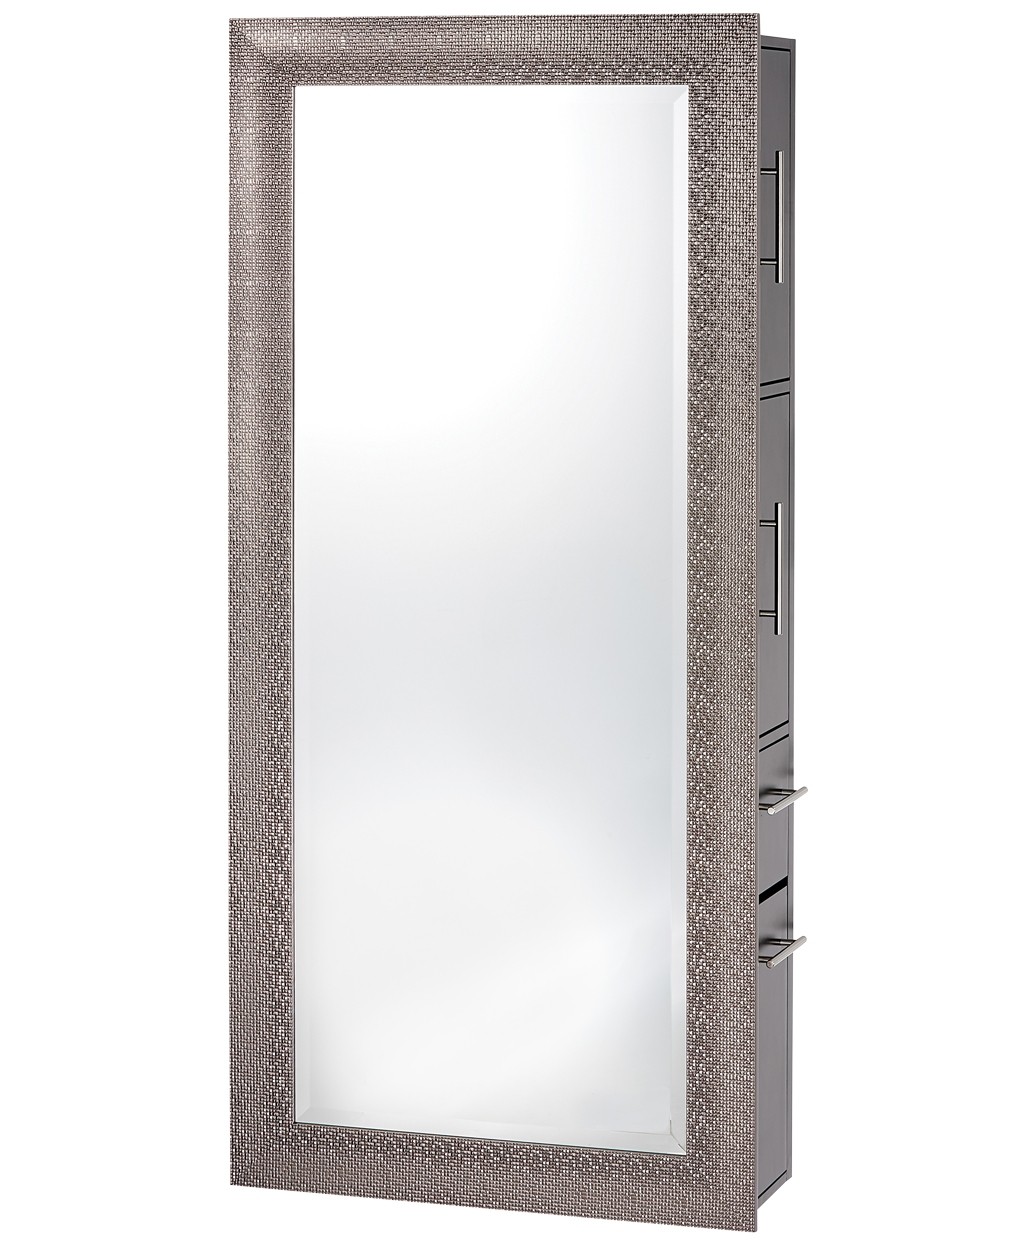 Pibbs 6619-SER Diamond Station Mirror Silver Frame with Server Color Options